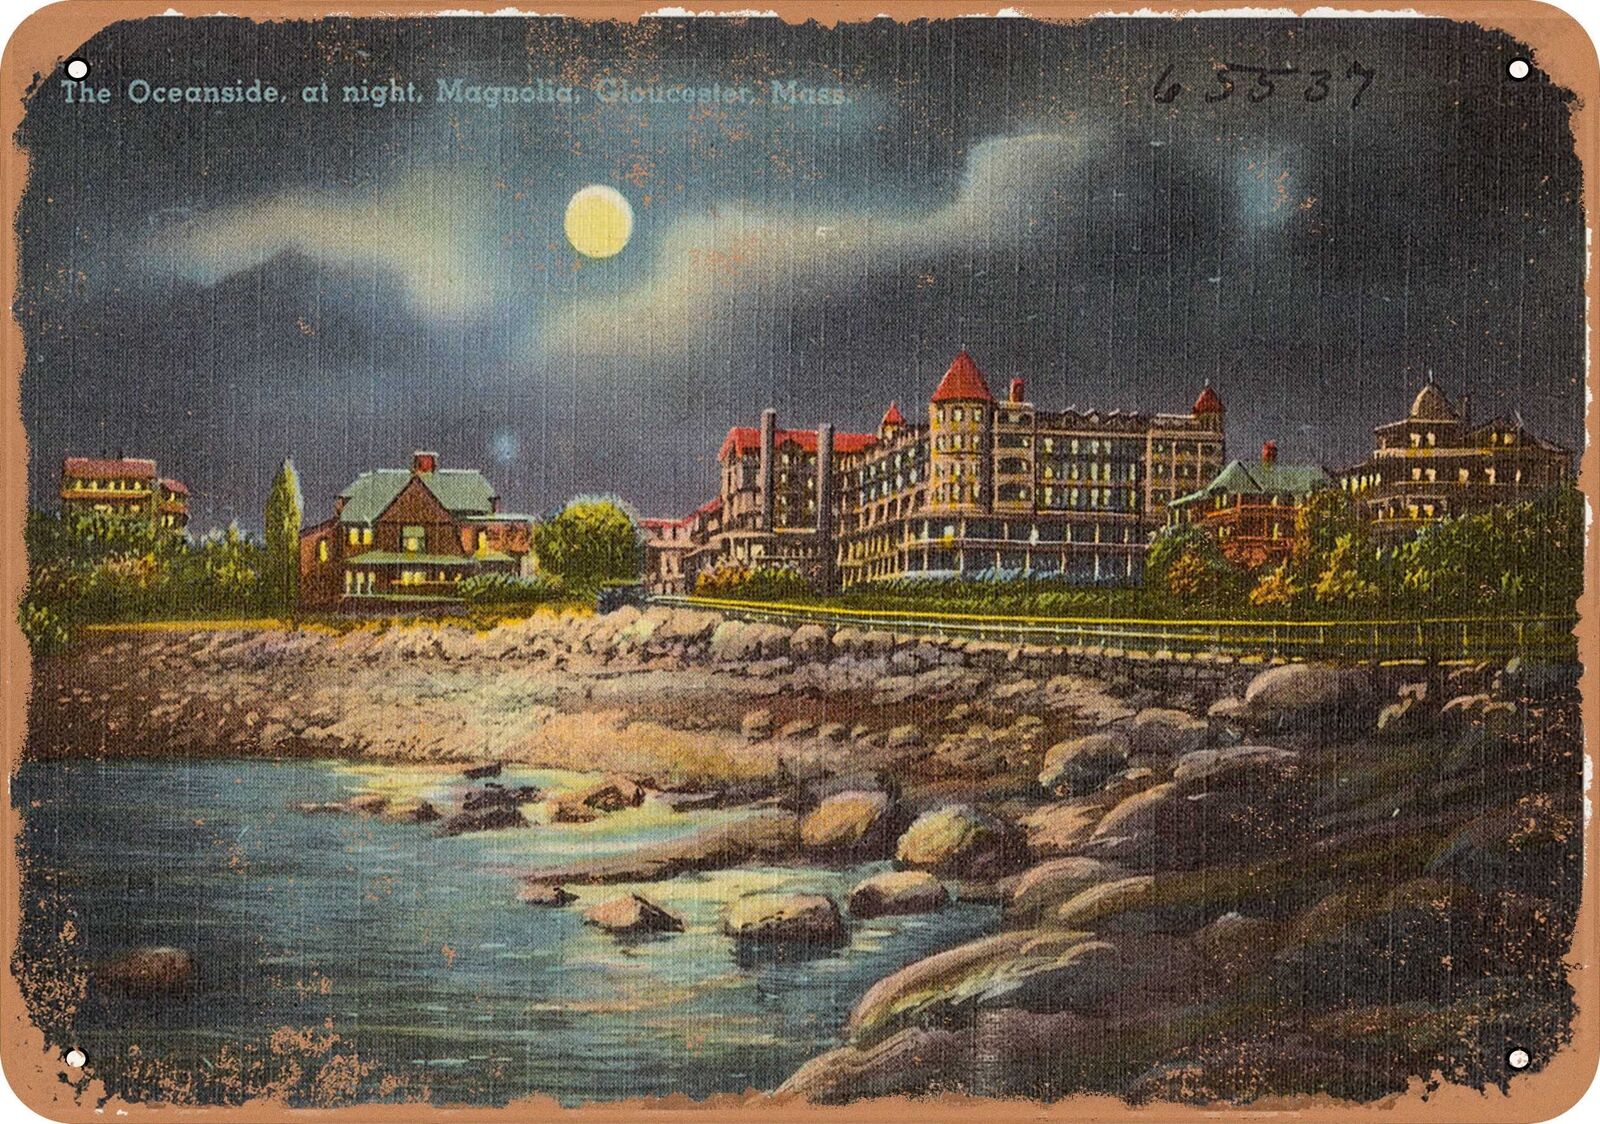 Metal Sign - Massachusetts Postcard - The oceanside at night, Magnolia, Glouces